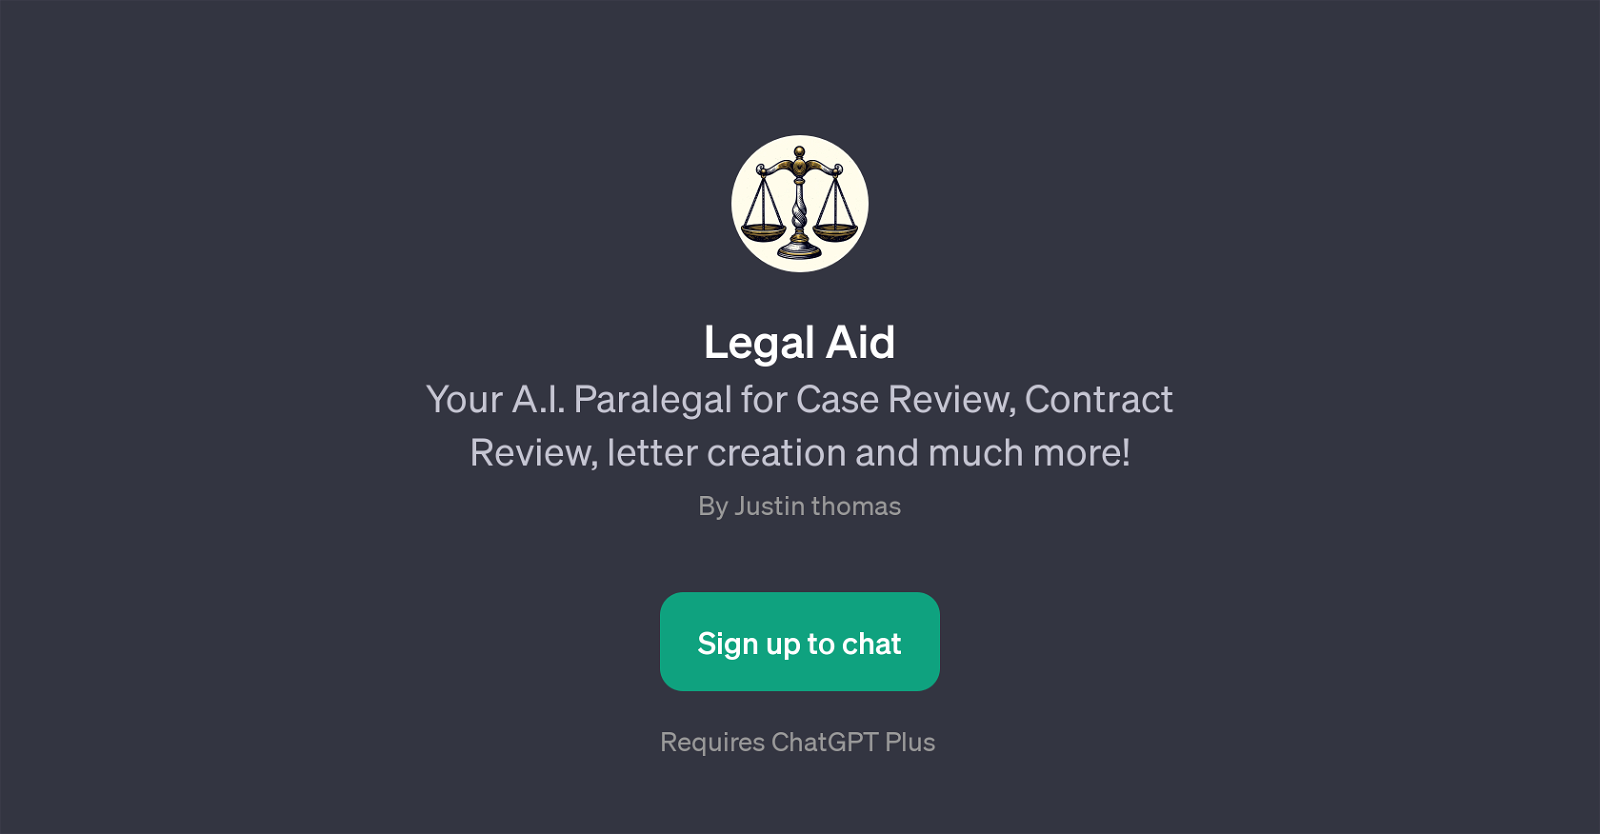 Legal Aid website